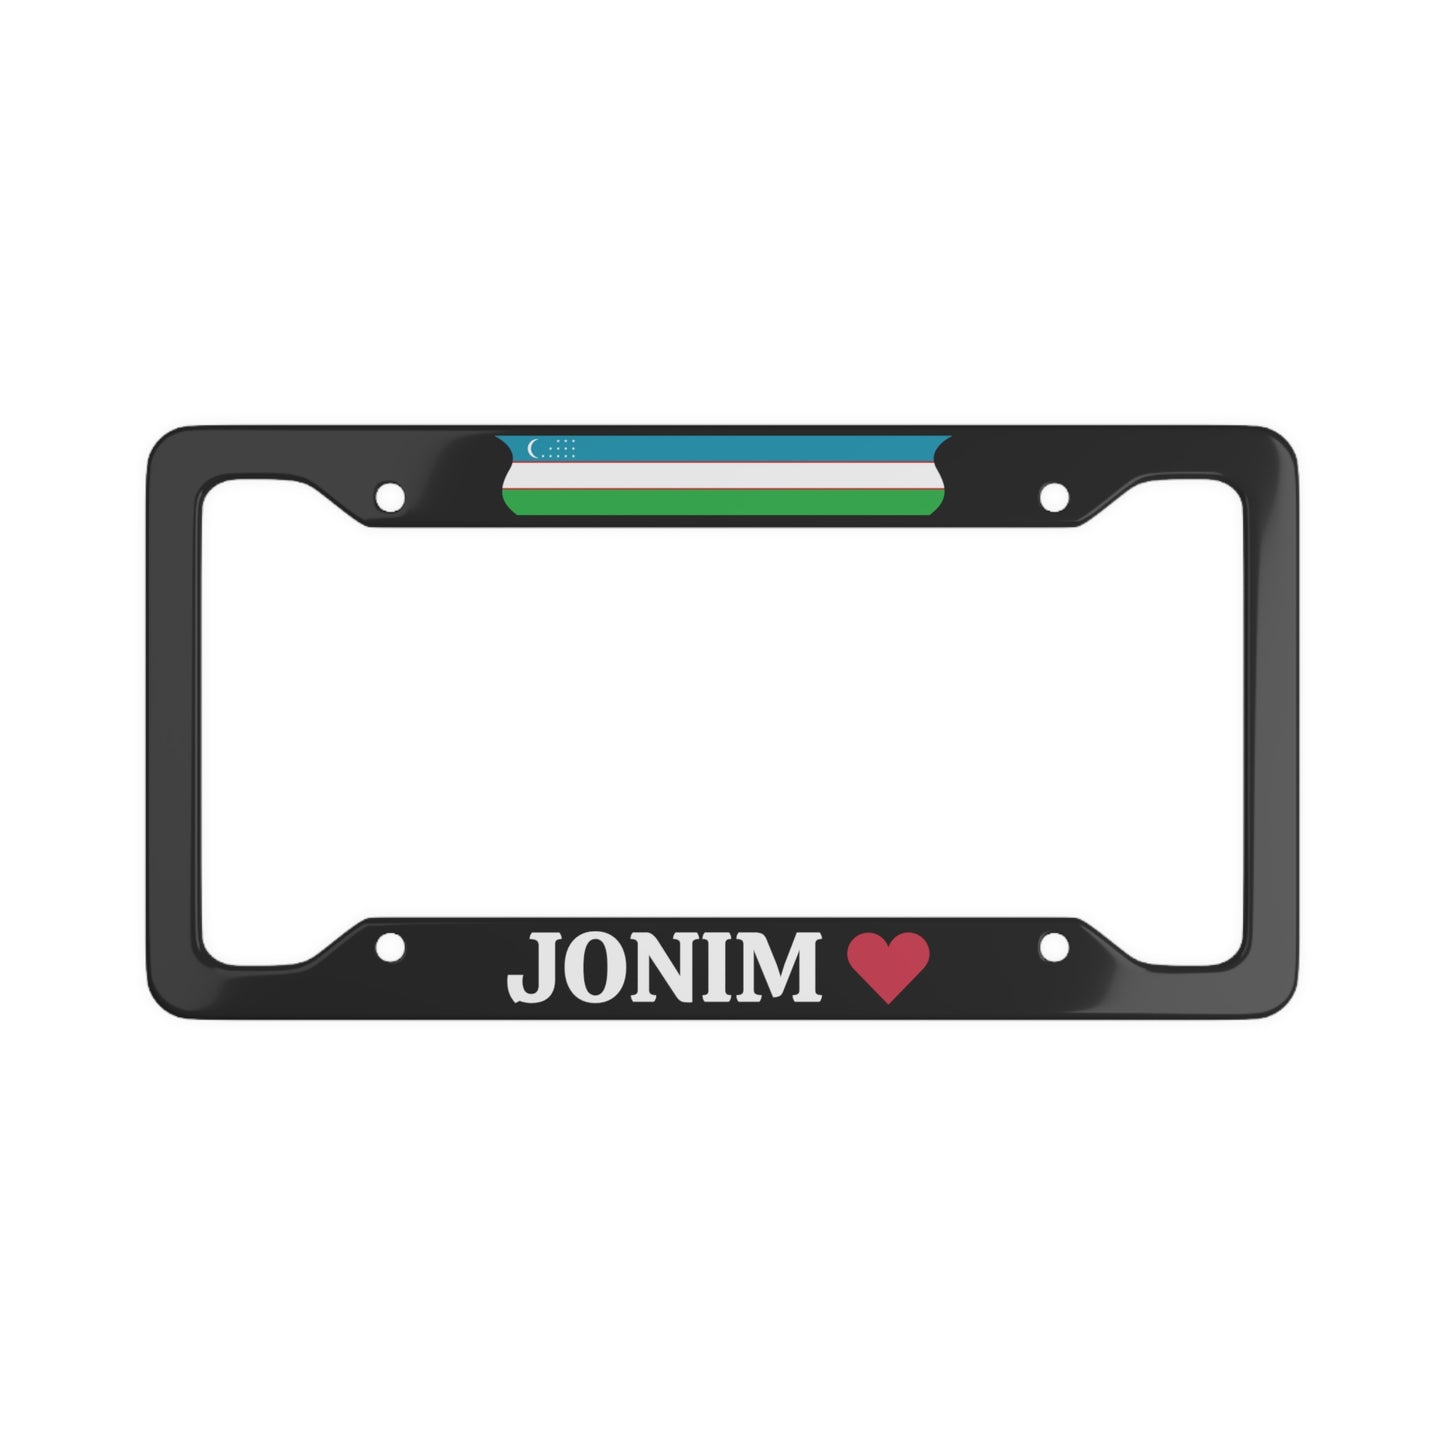 Jonim License Plate Frame